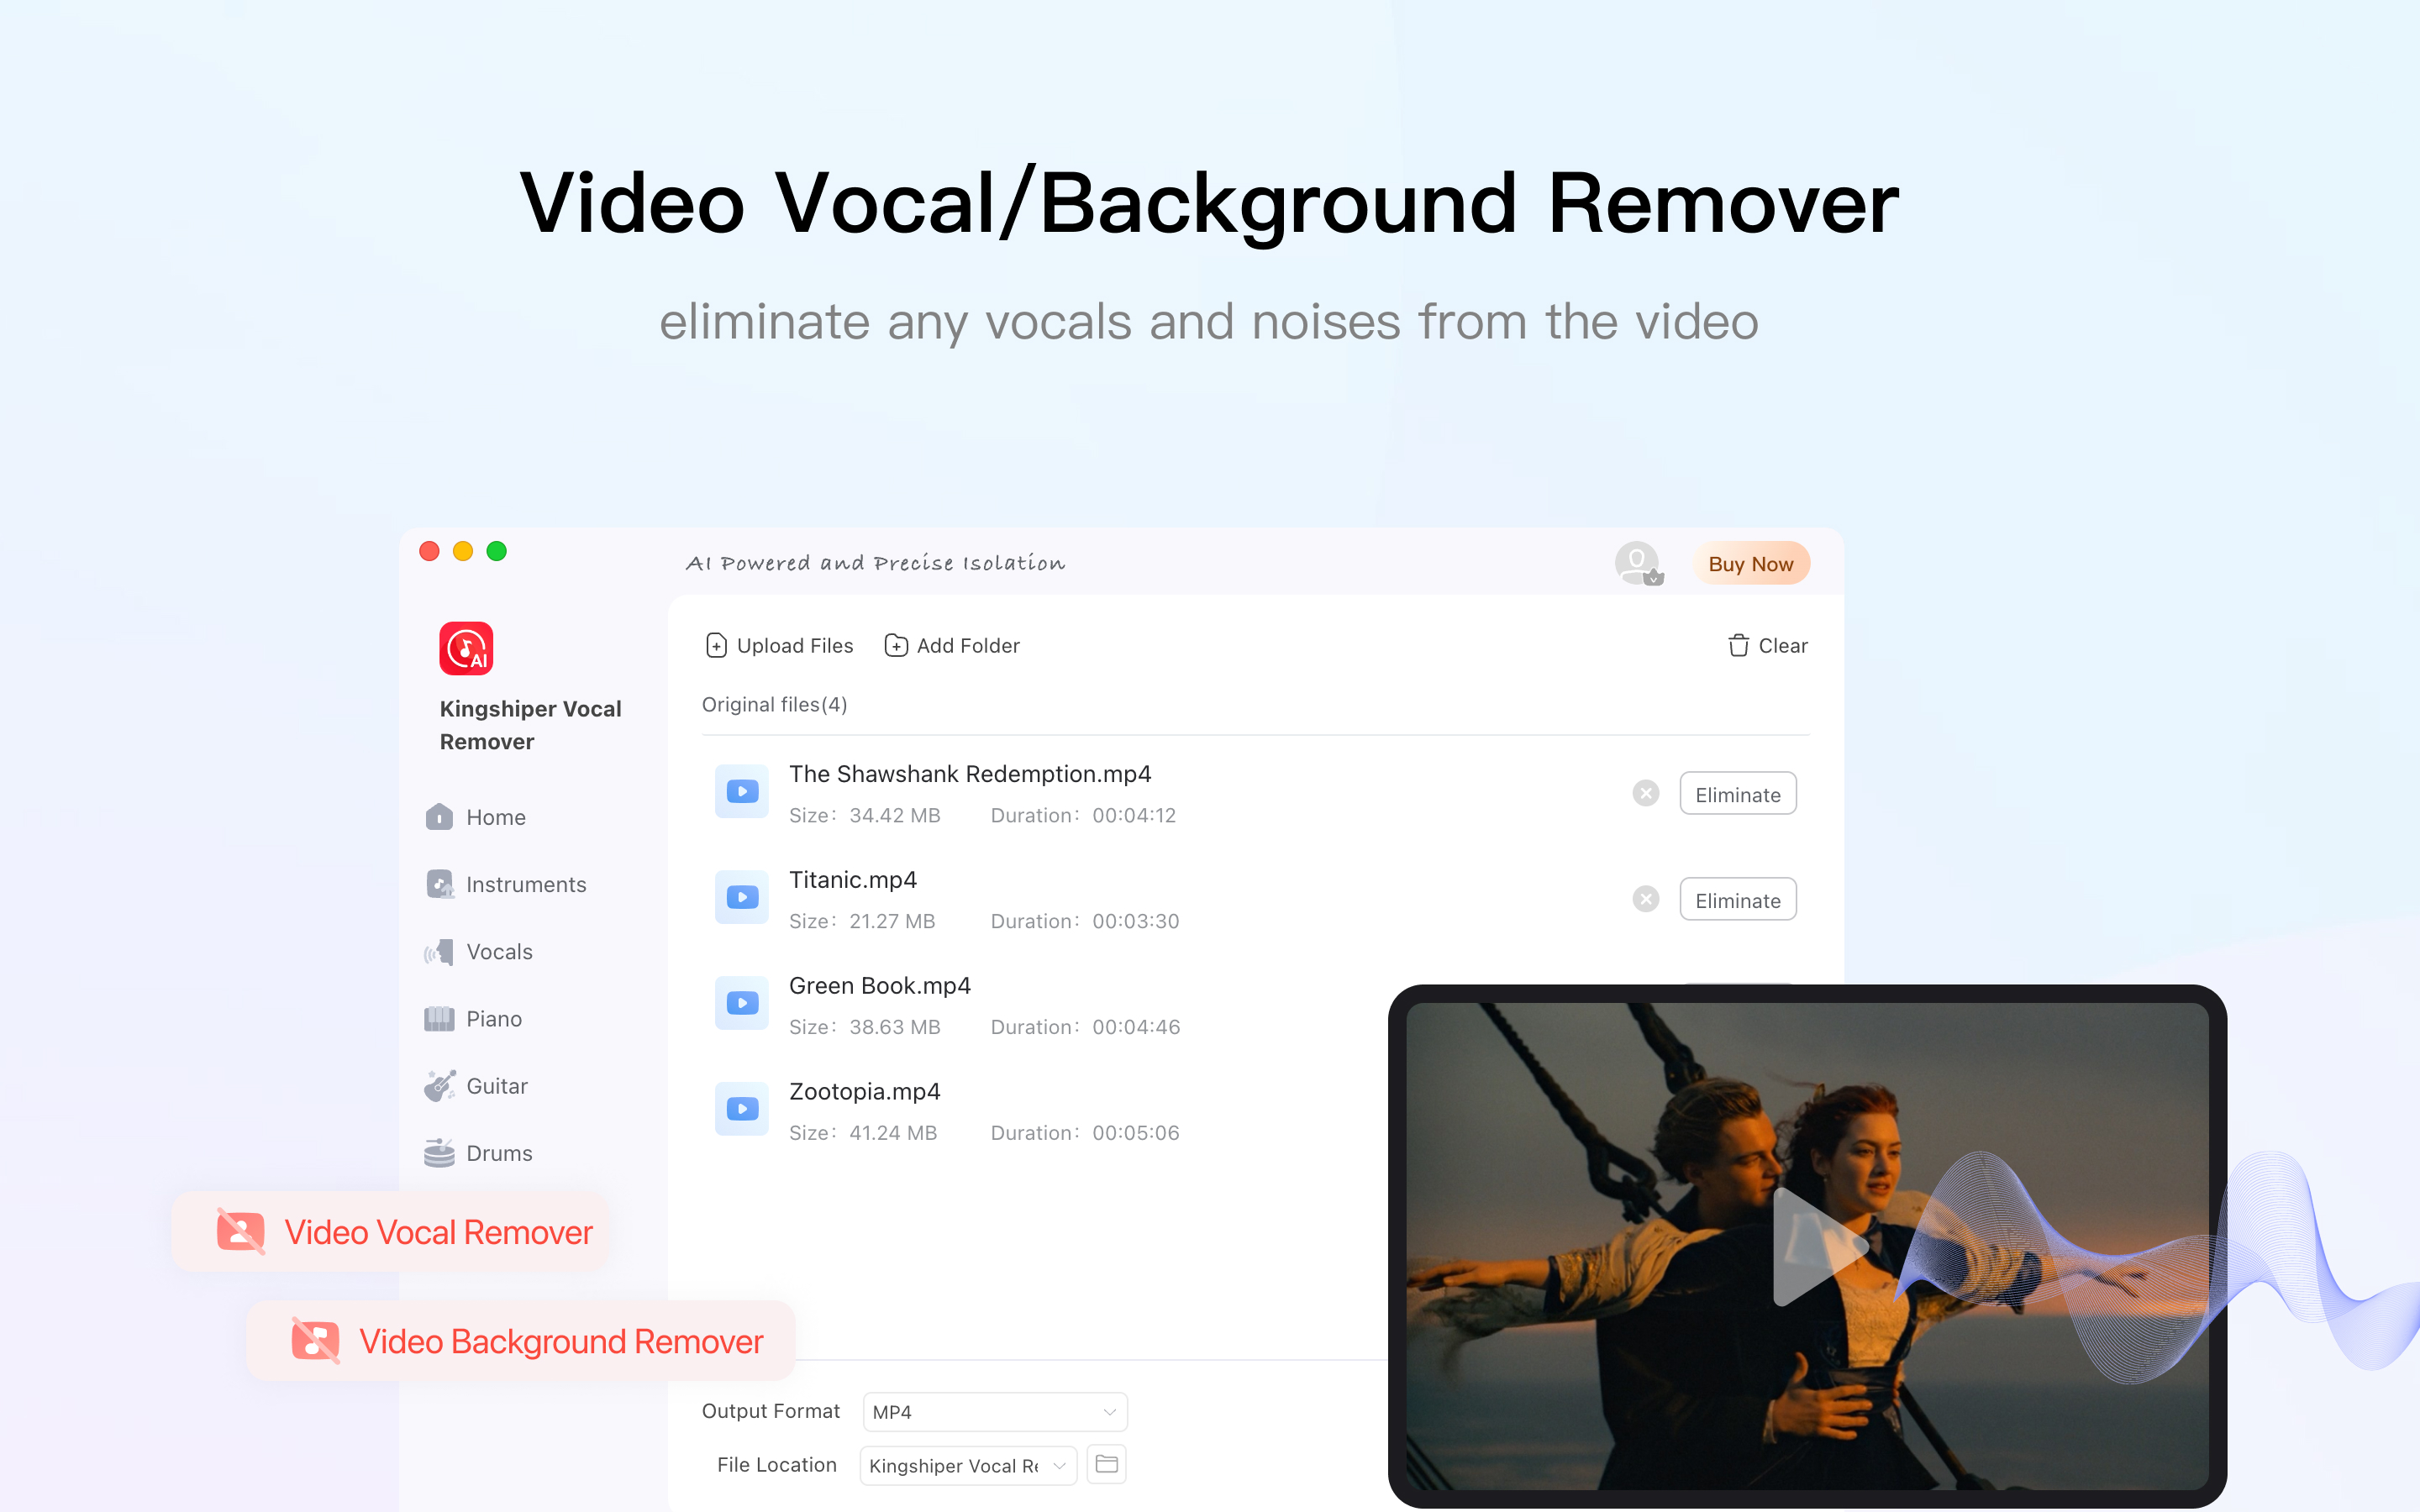 Kingshiper Vocal Remover Video Vocal/Background Remover